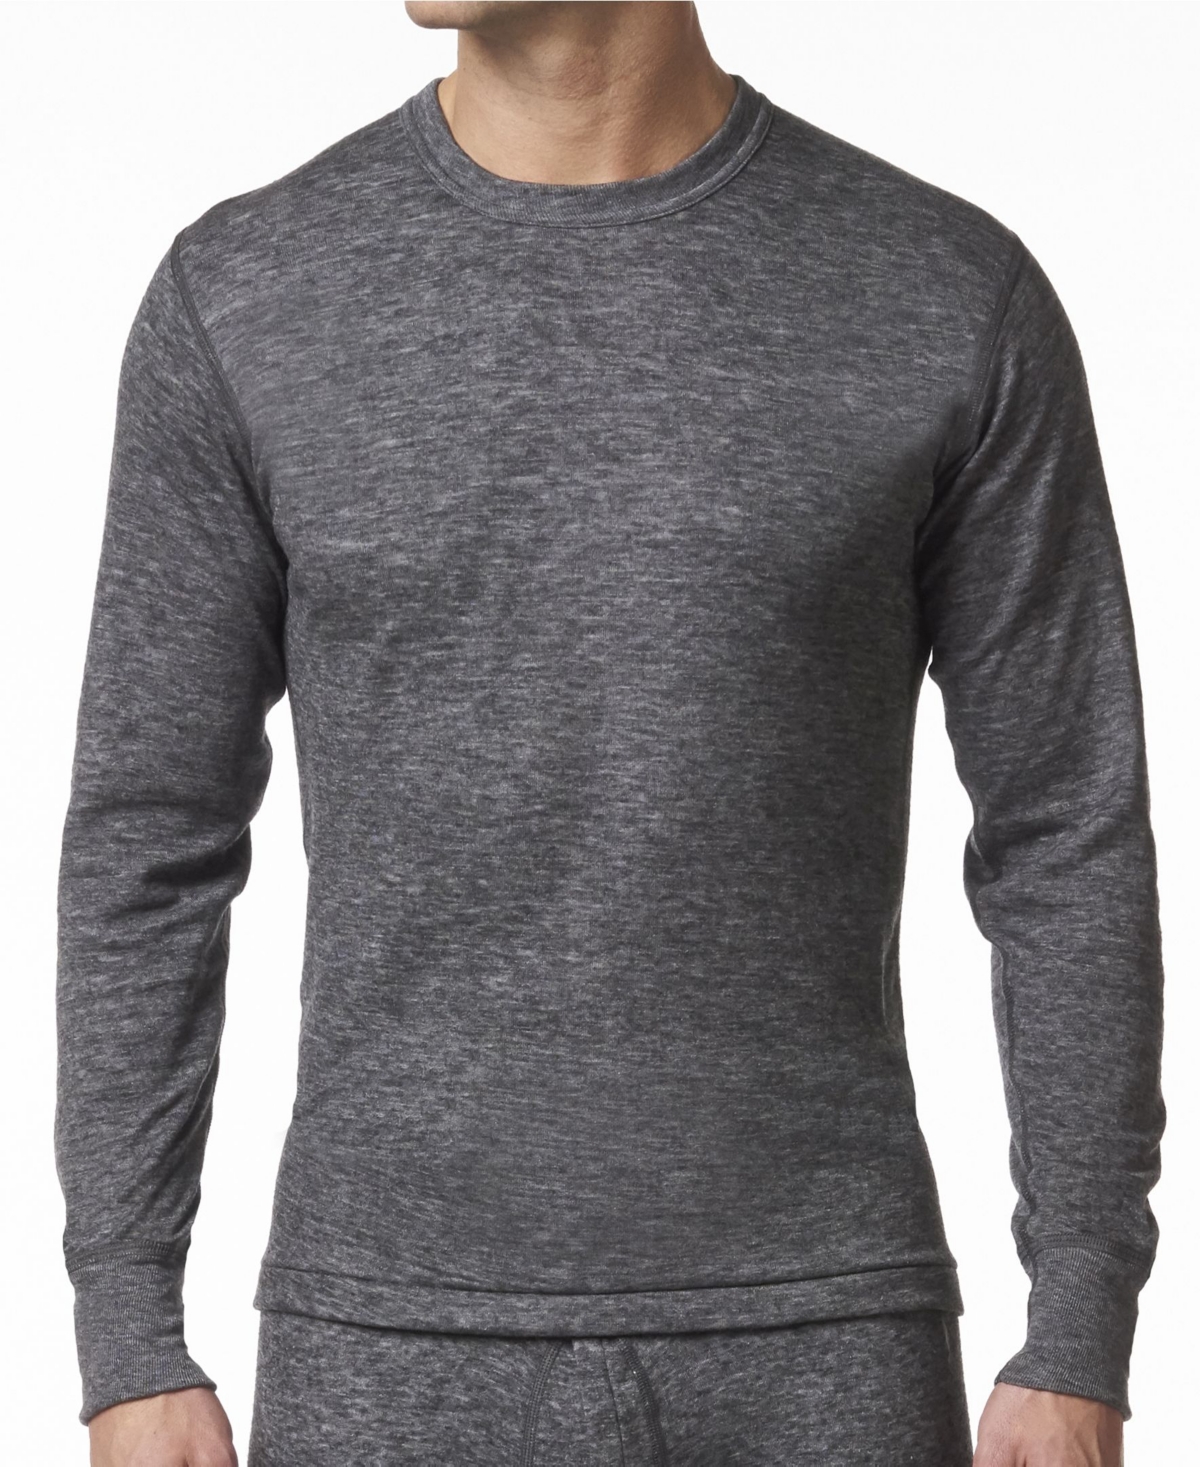 Men's 2 Layer Merino Wool Blend Thermal Long Sleeve Shirt - Charcoal